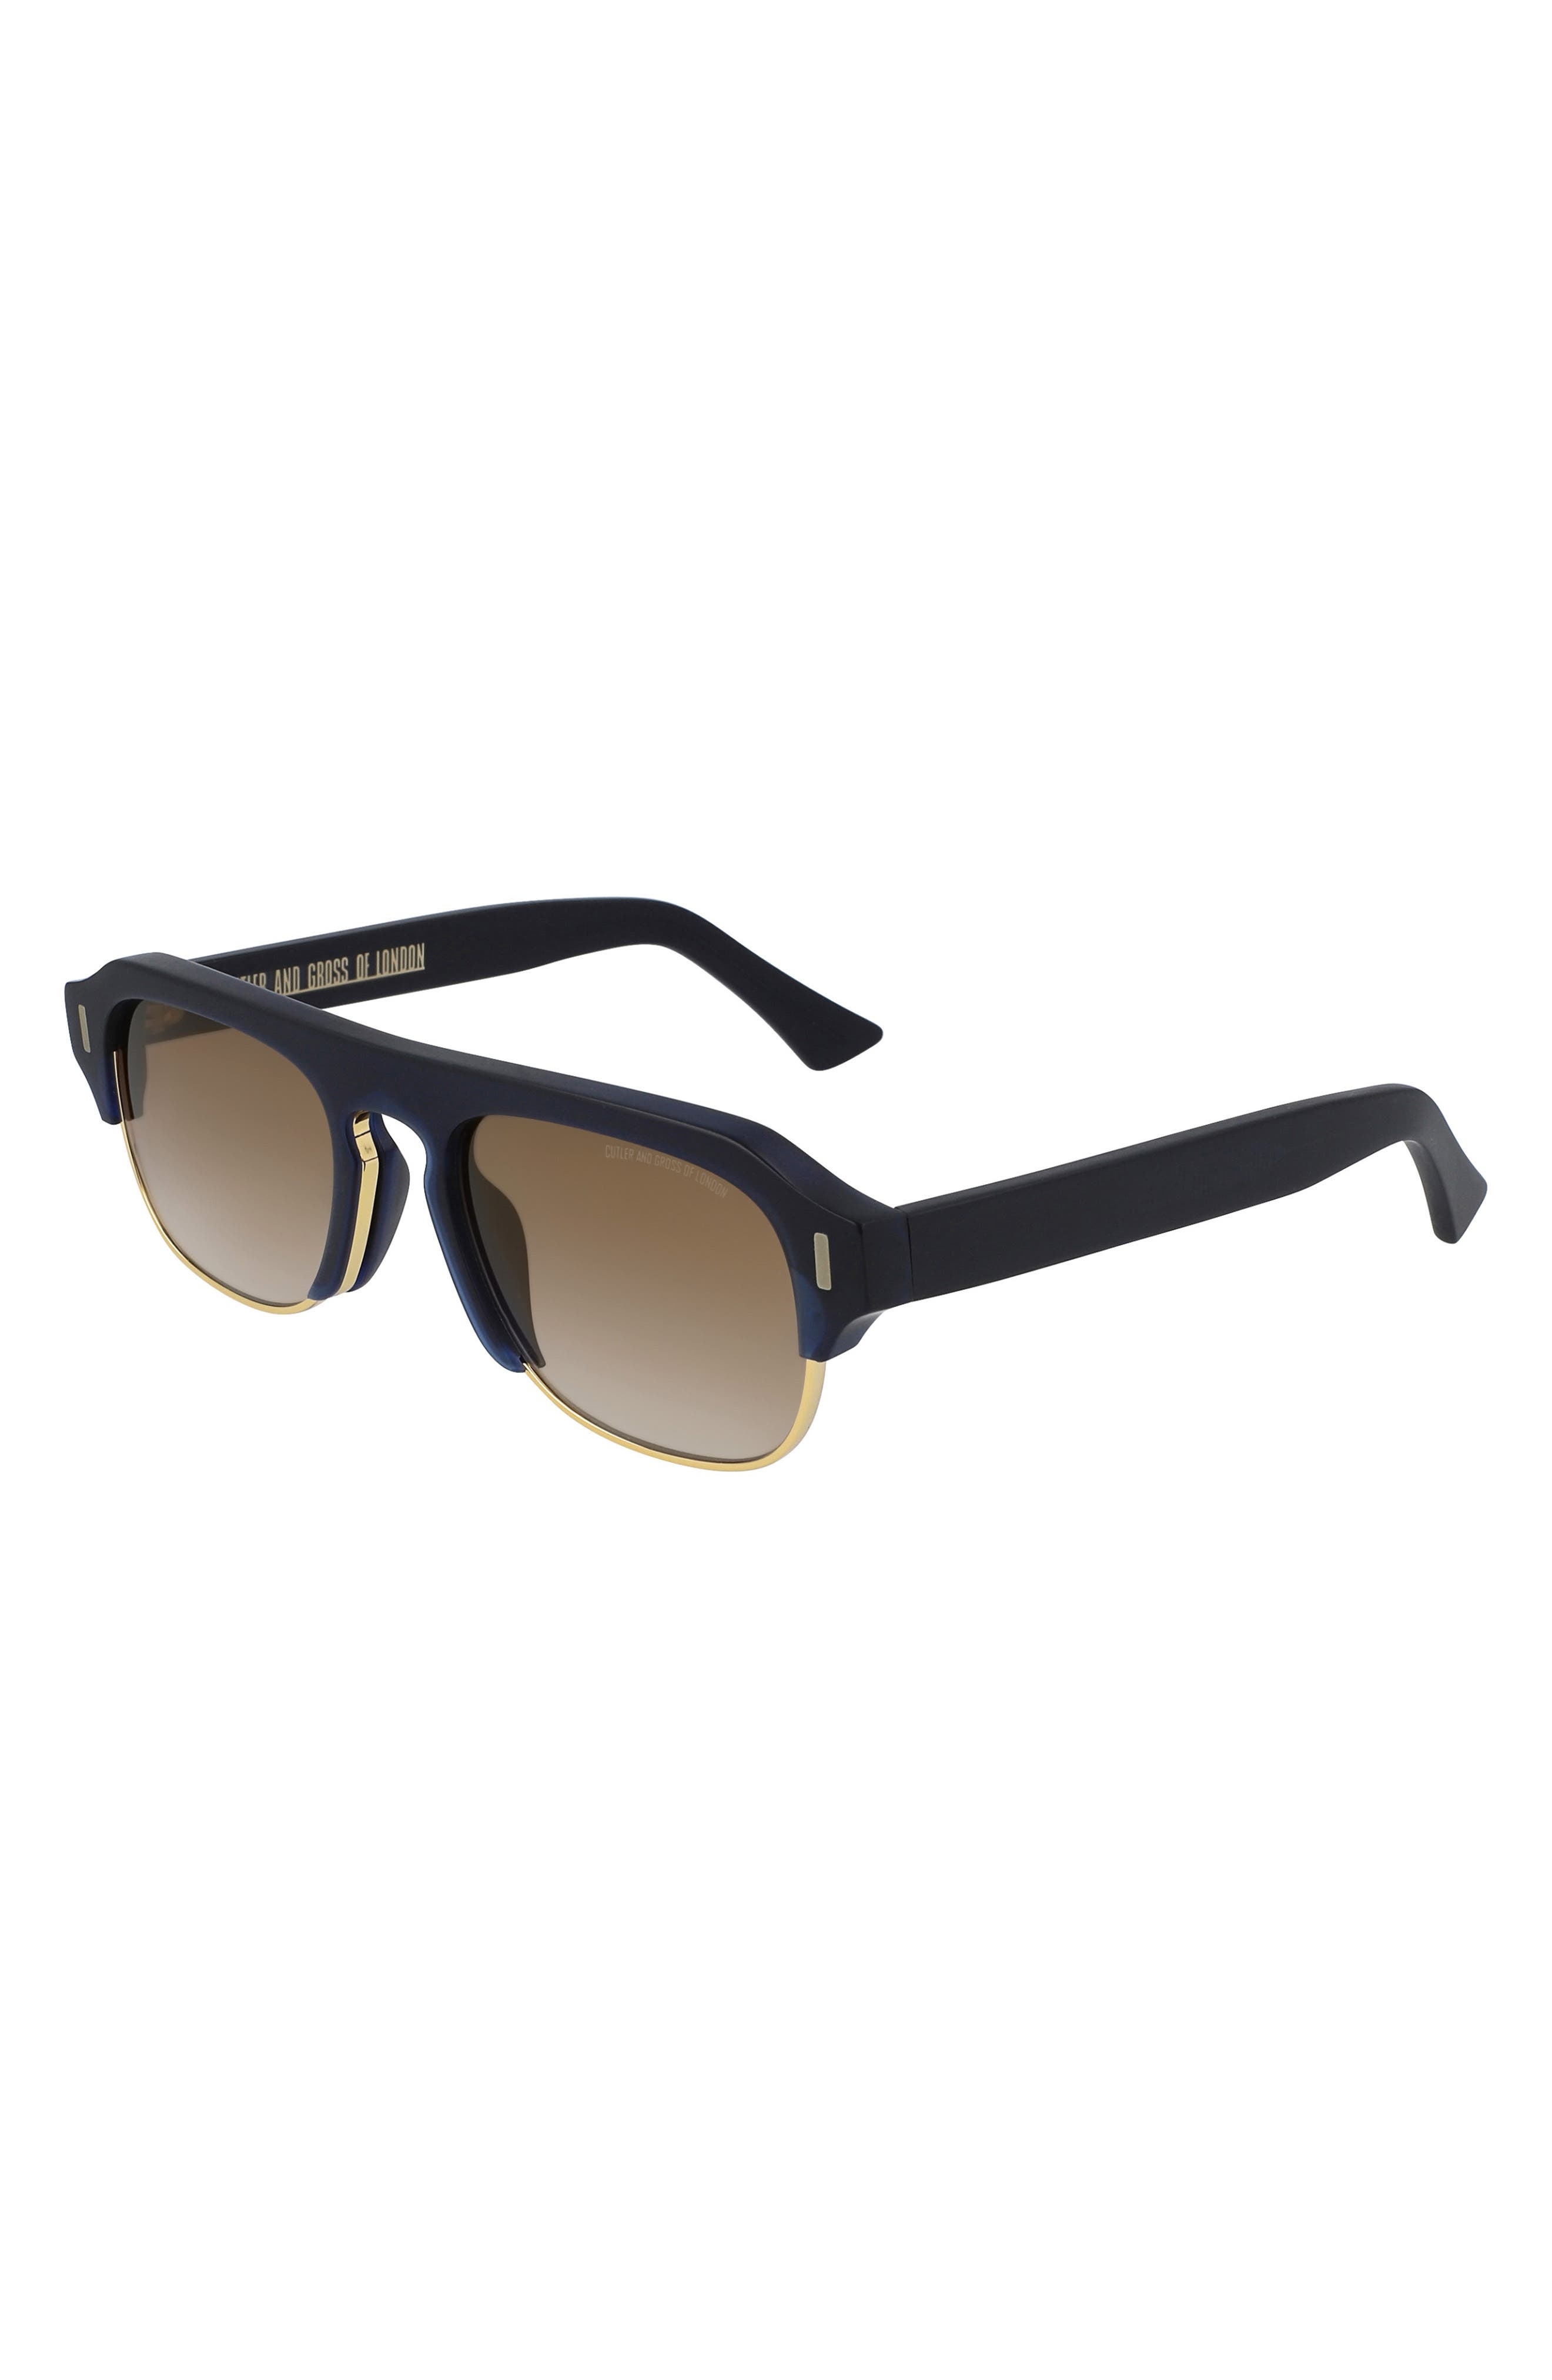 56mm Flat Top Sunglasses in Navy Blue/Gradient - 2